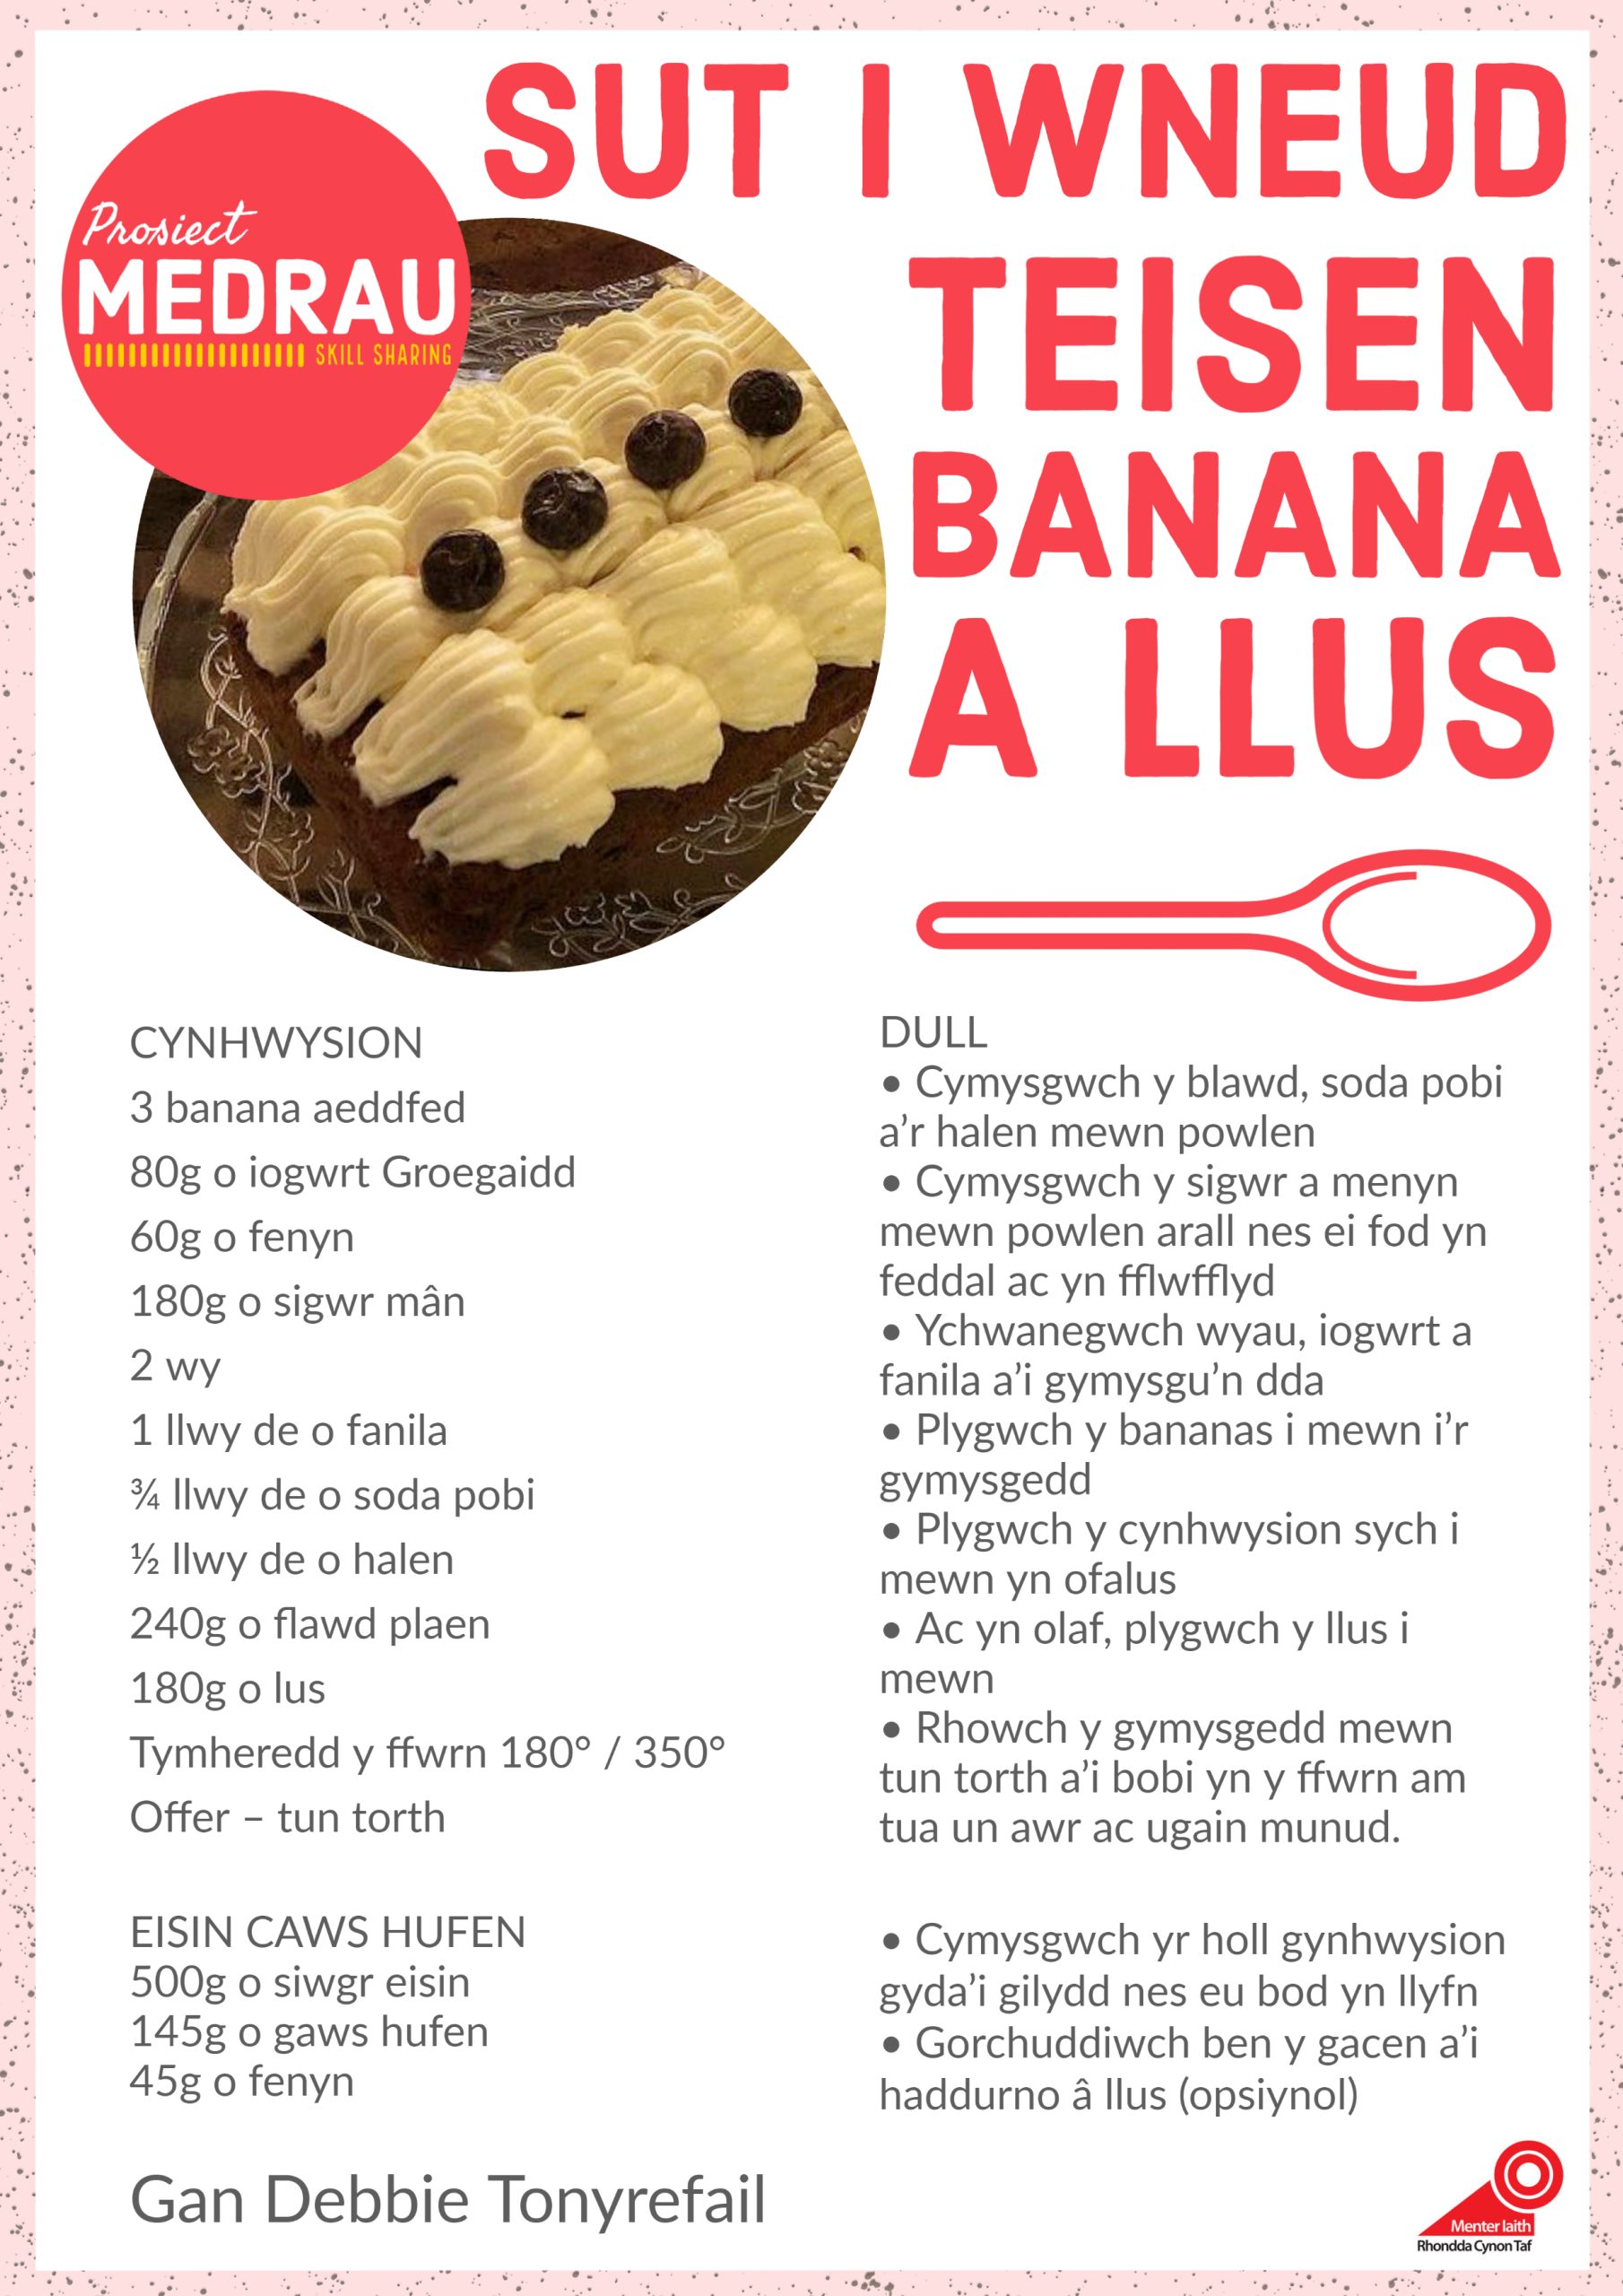 Teisen Banana a Llus-1